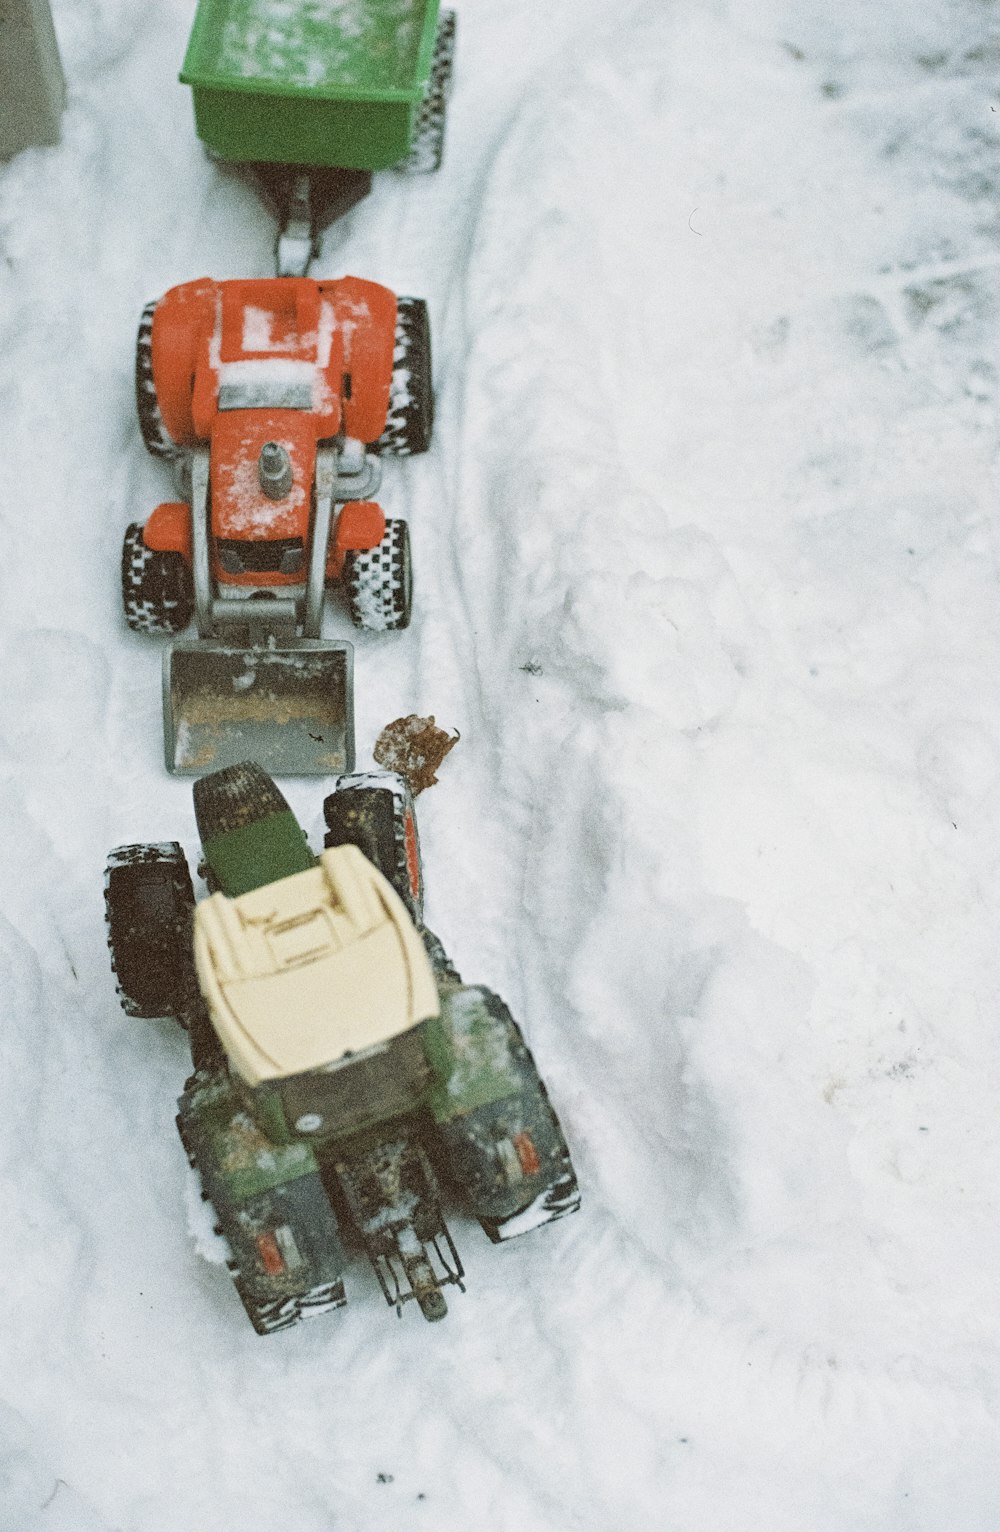 three red vehicle toys on snow